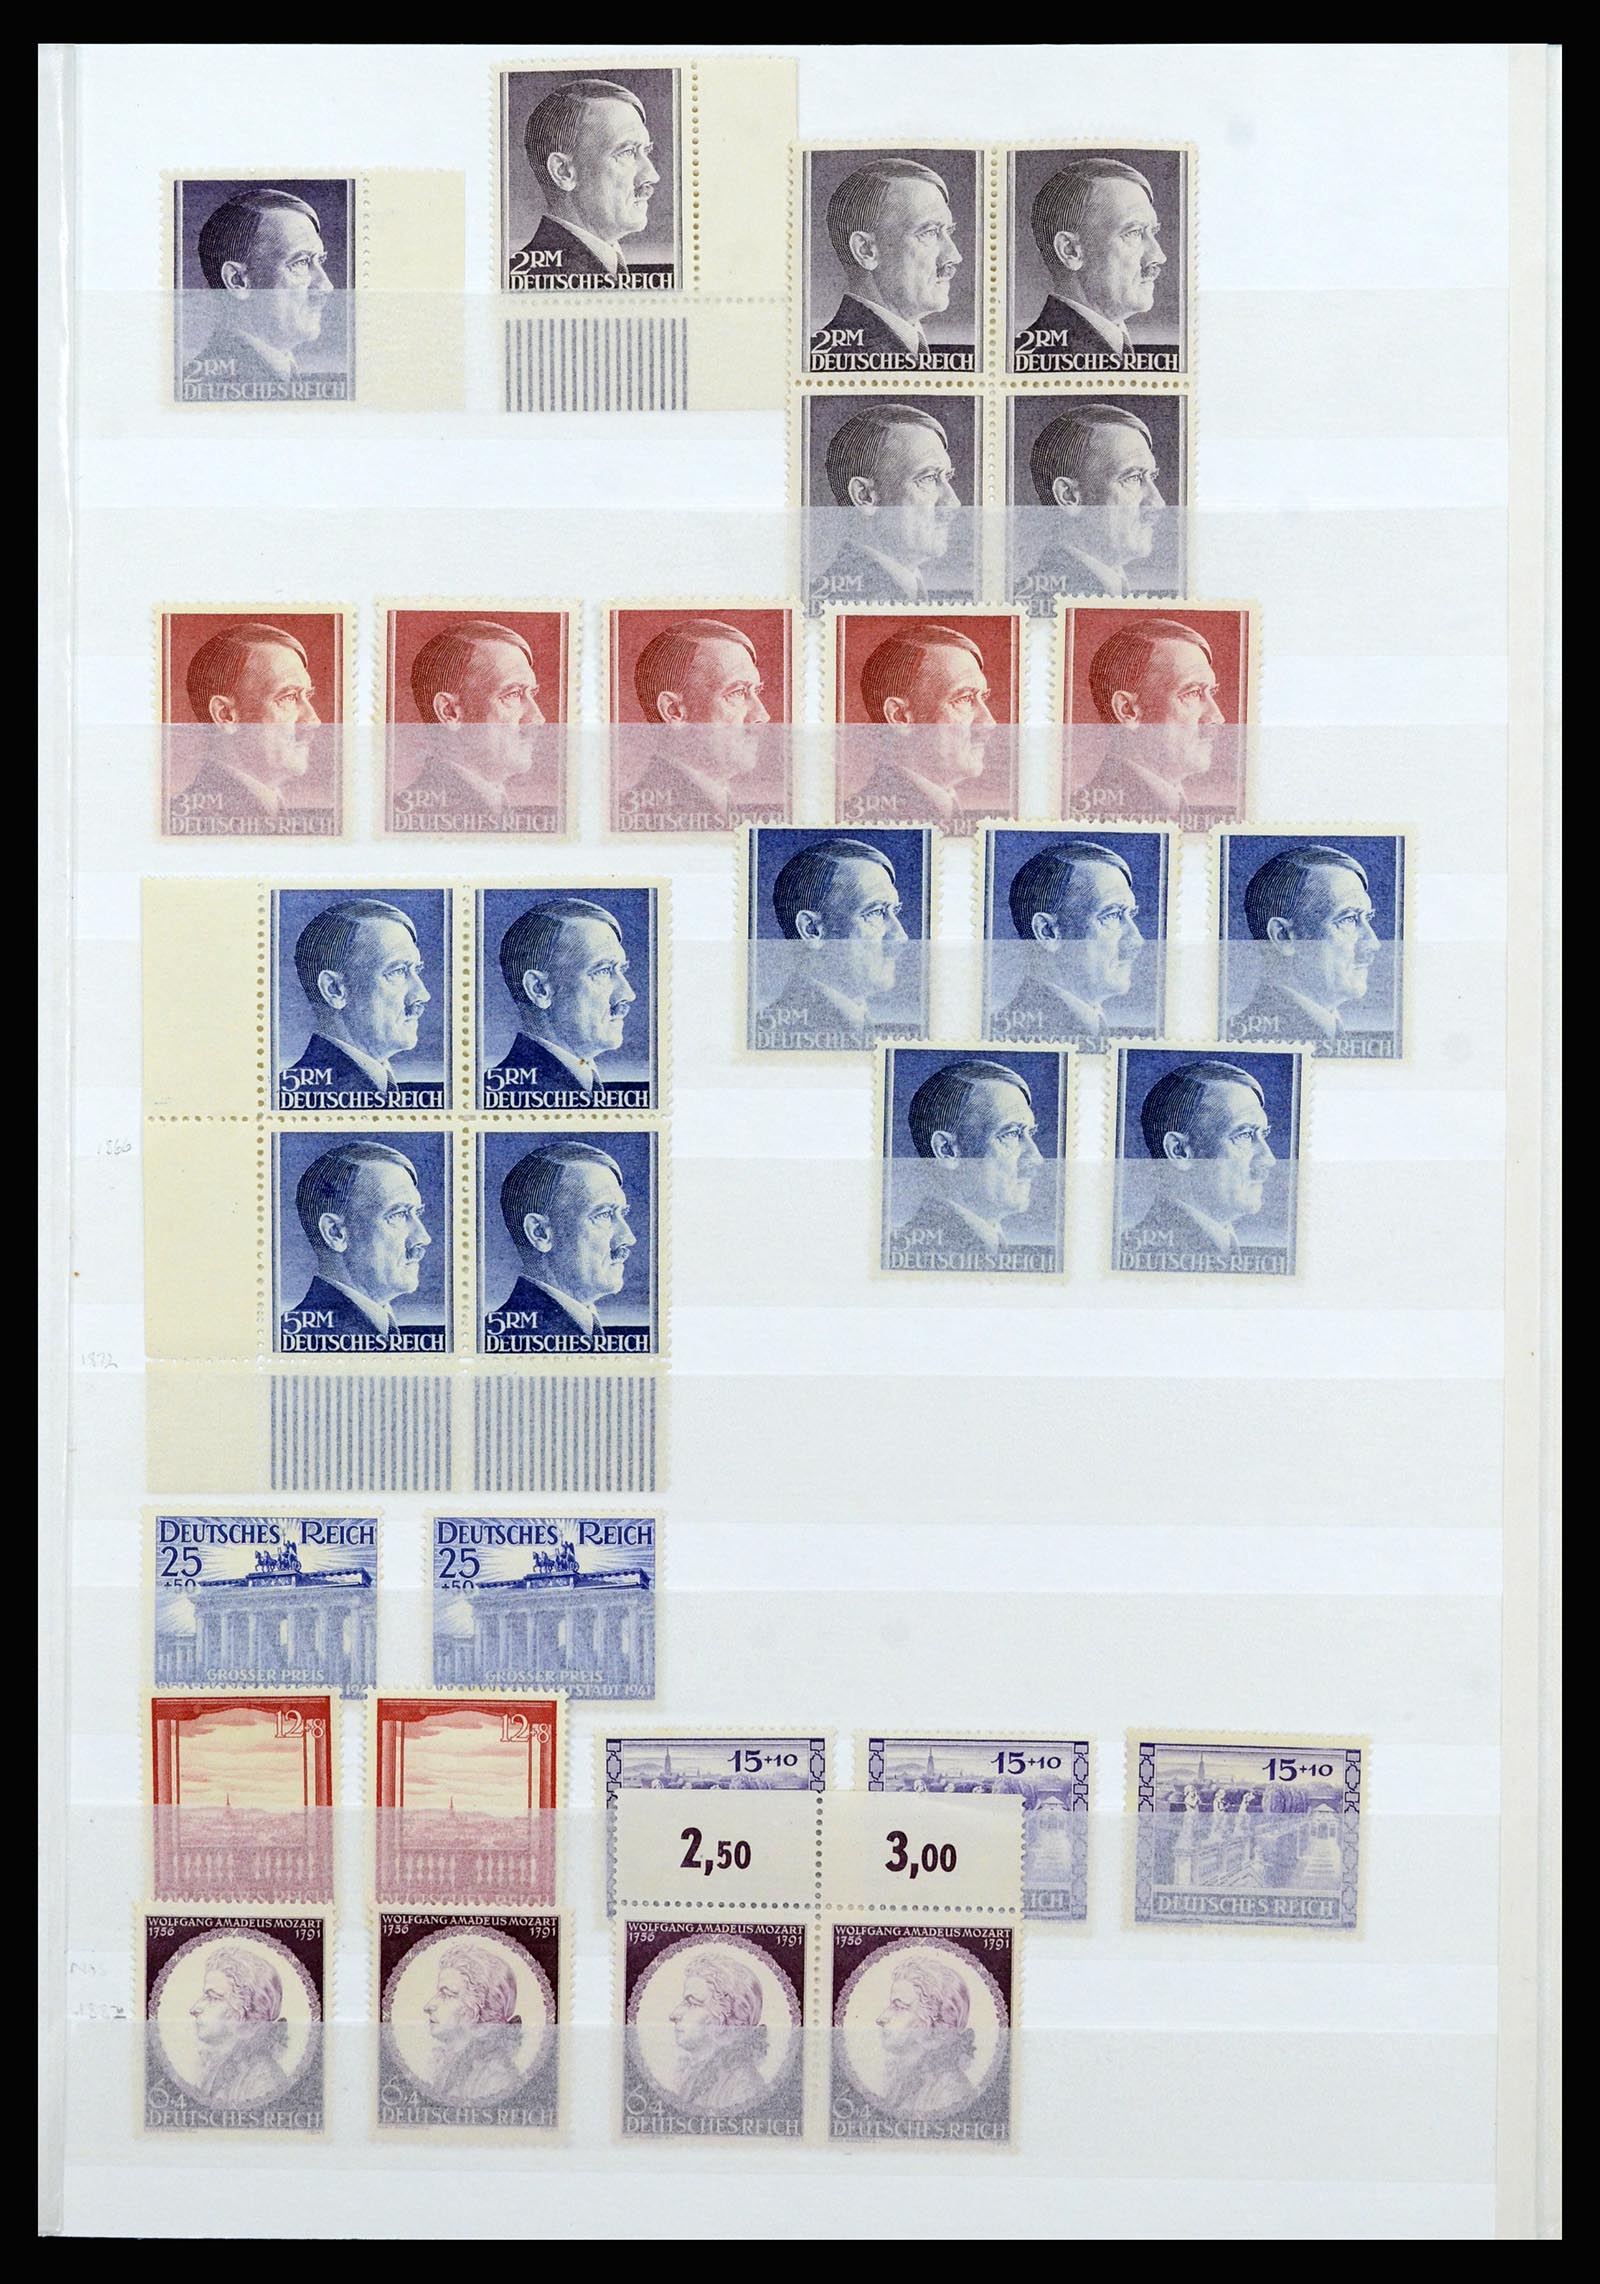 37103 021 - Stamp collection 37103 German Reich 1880-1945.